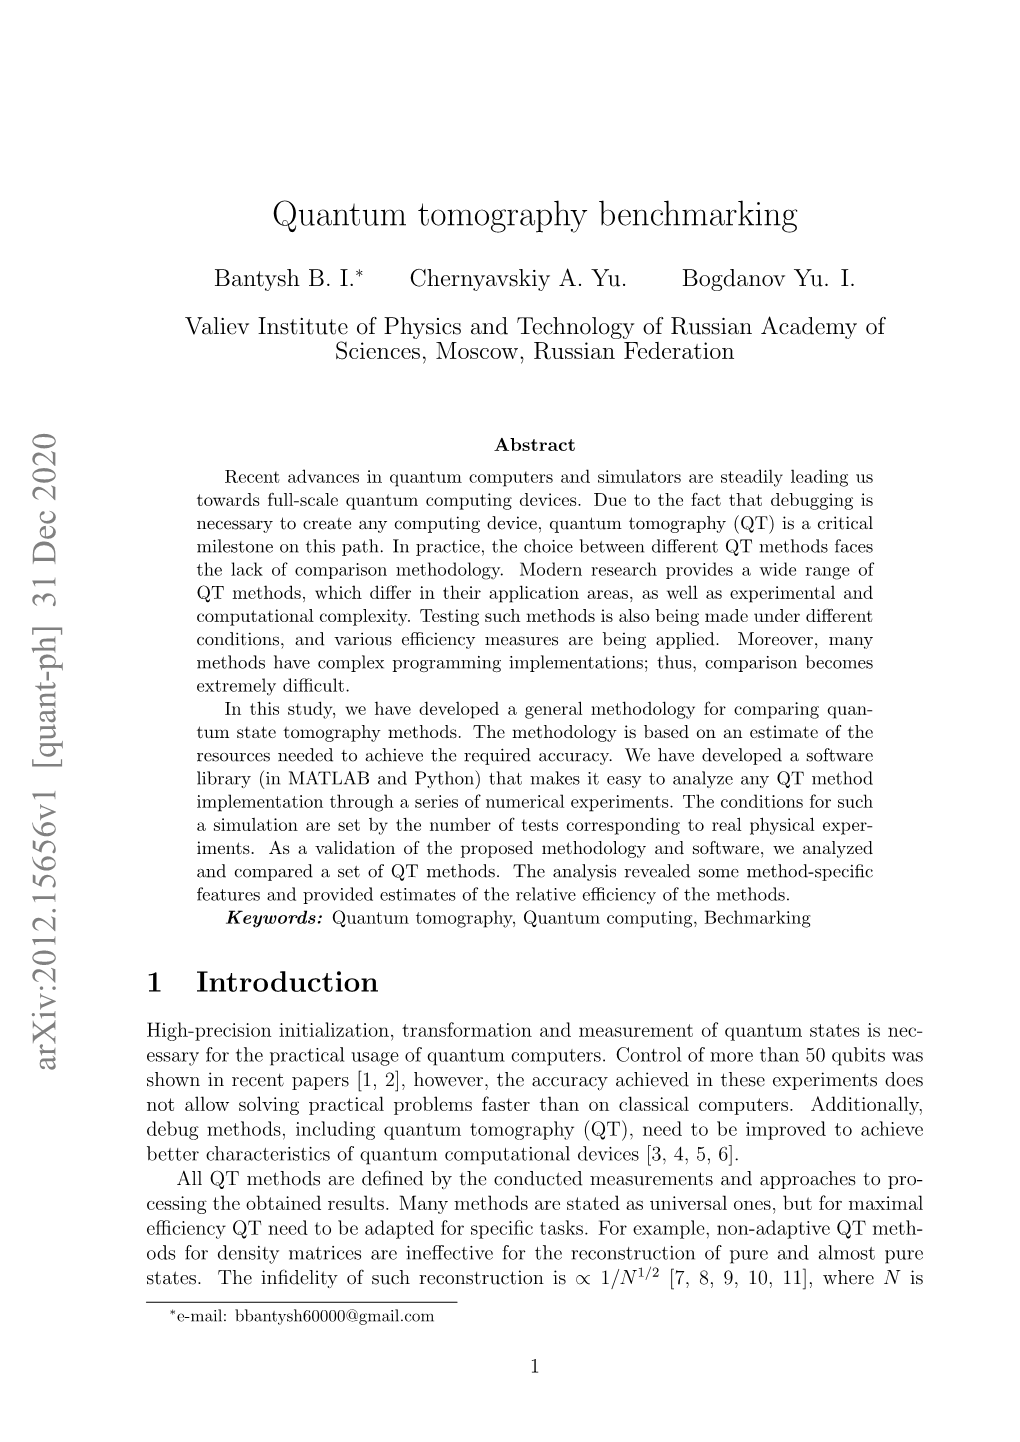 Quantum Tomography Benchmarking Arxiv:2012.15656V1 [Quant-Ph] 31